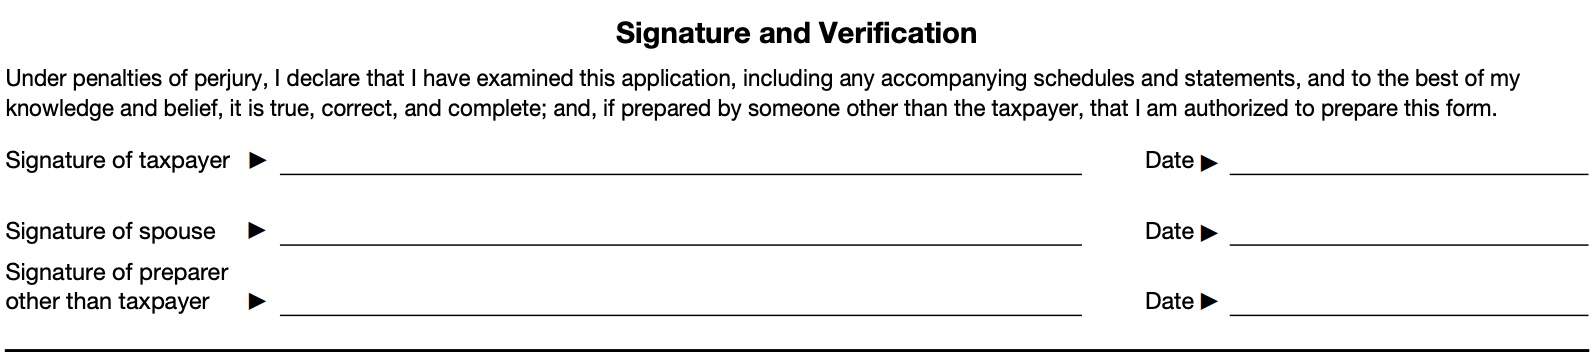 signature & verification